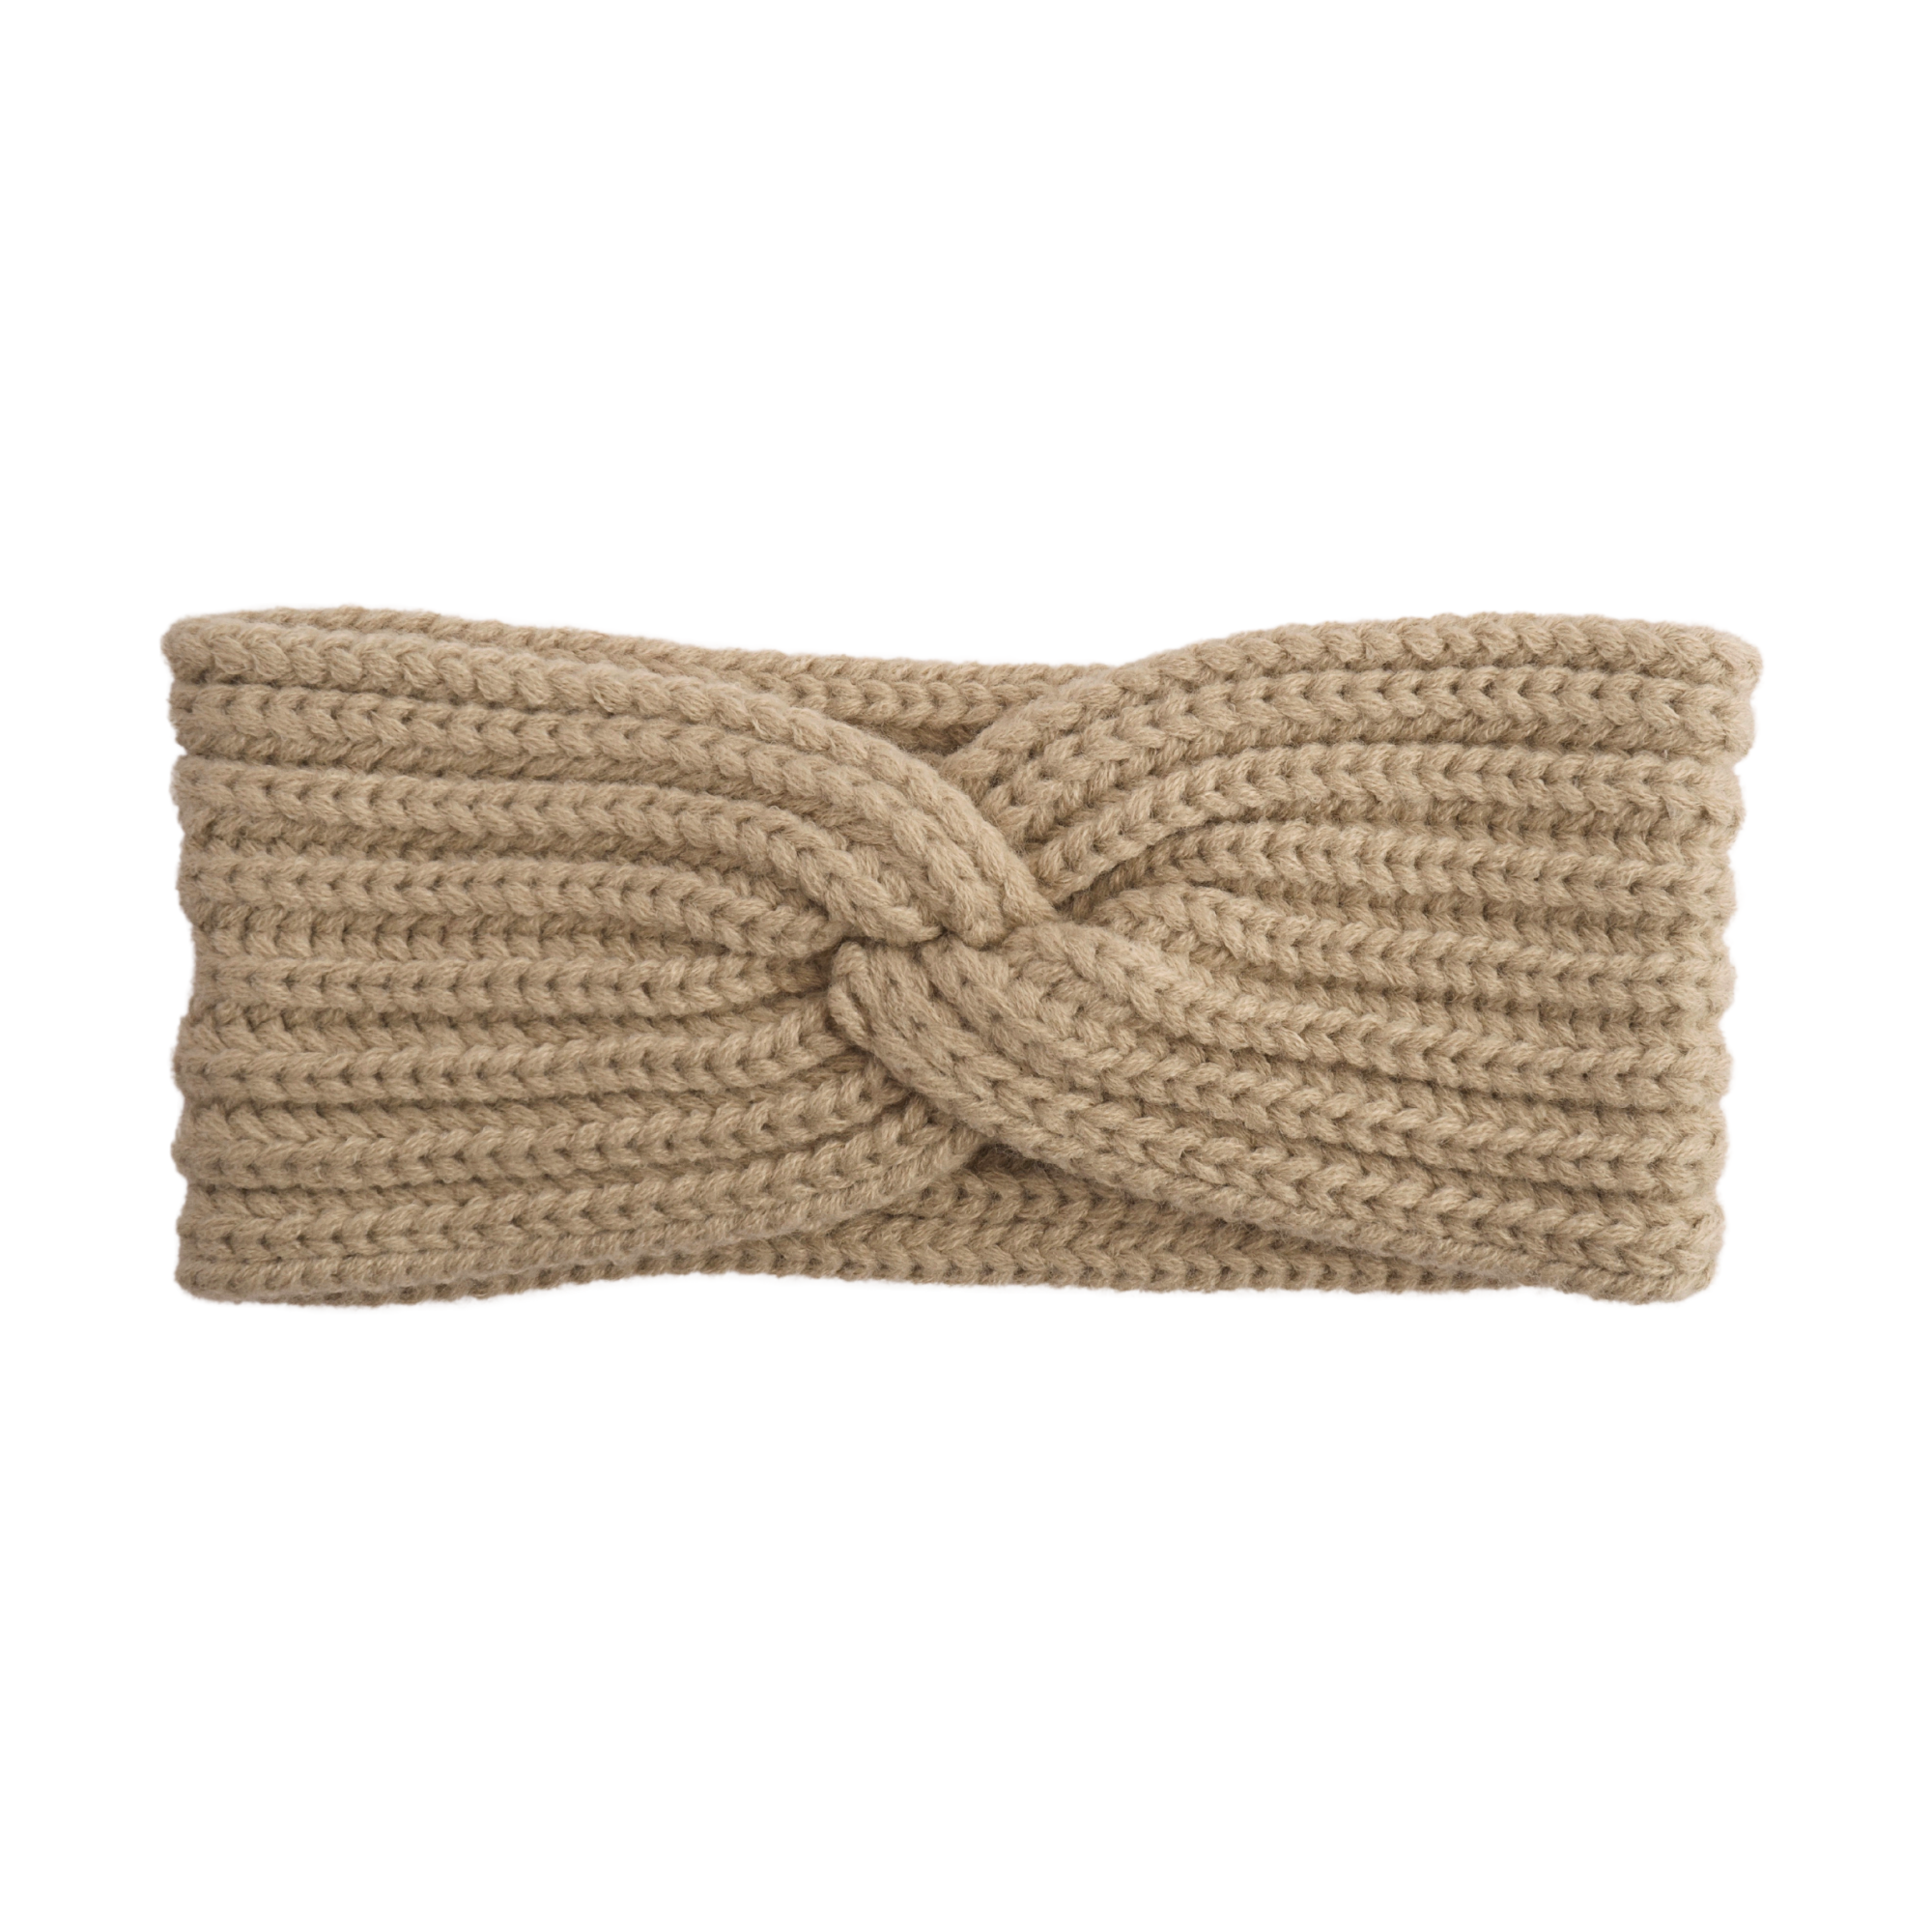 Knitted Headband - Latte